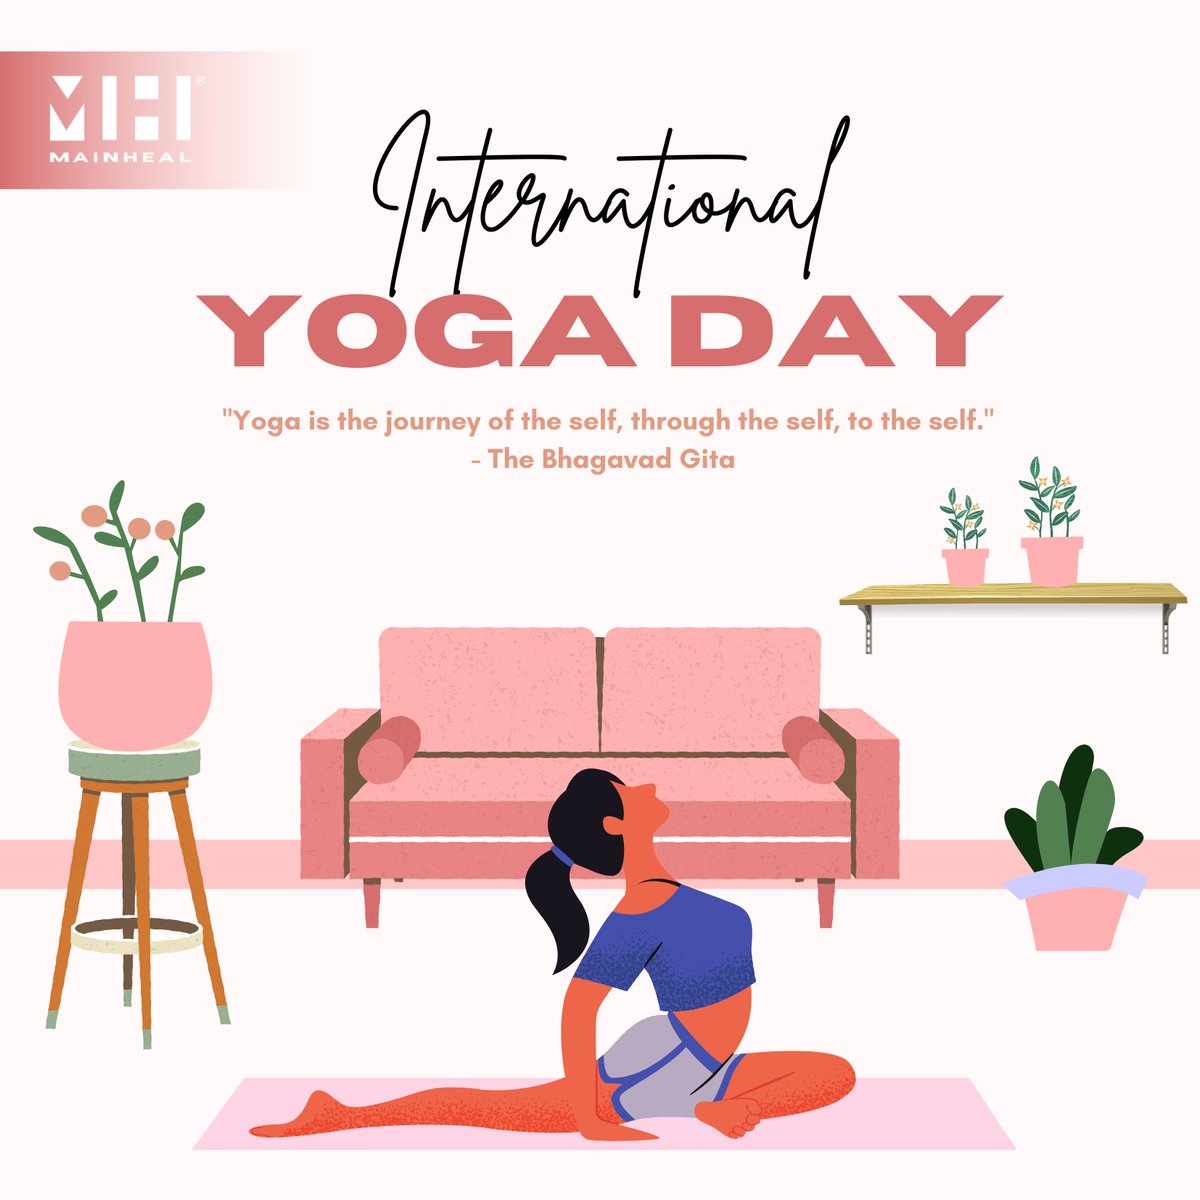 'Yoga is the journey of the self, through the self, to the self.'- The Bhagavad Gita

Happy International Yoga Day! 

#beintentional #yoga #YogaDay2023 #FitIndia #healthy #hathayoga #yogaathome #YogaDay #asana #yogatime #selfcare #iloveyoga #YogaForWellness #YogaEveryday #Yog #om